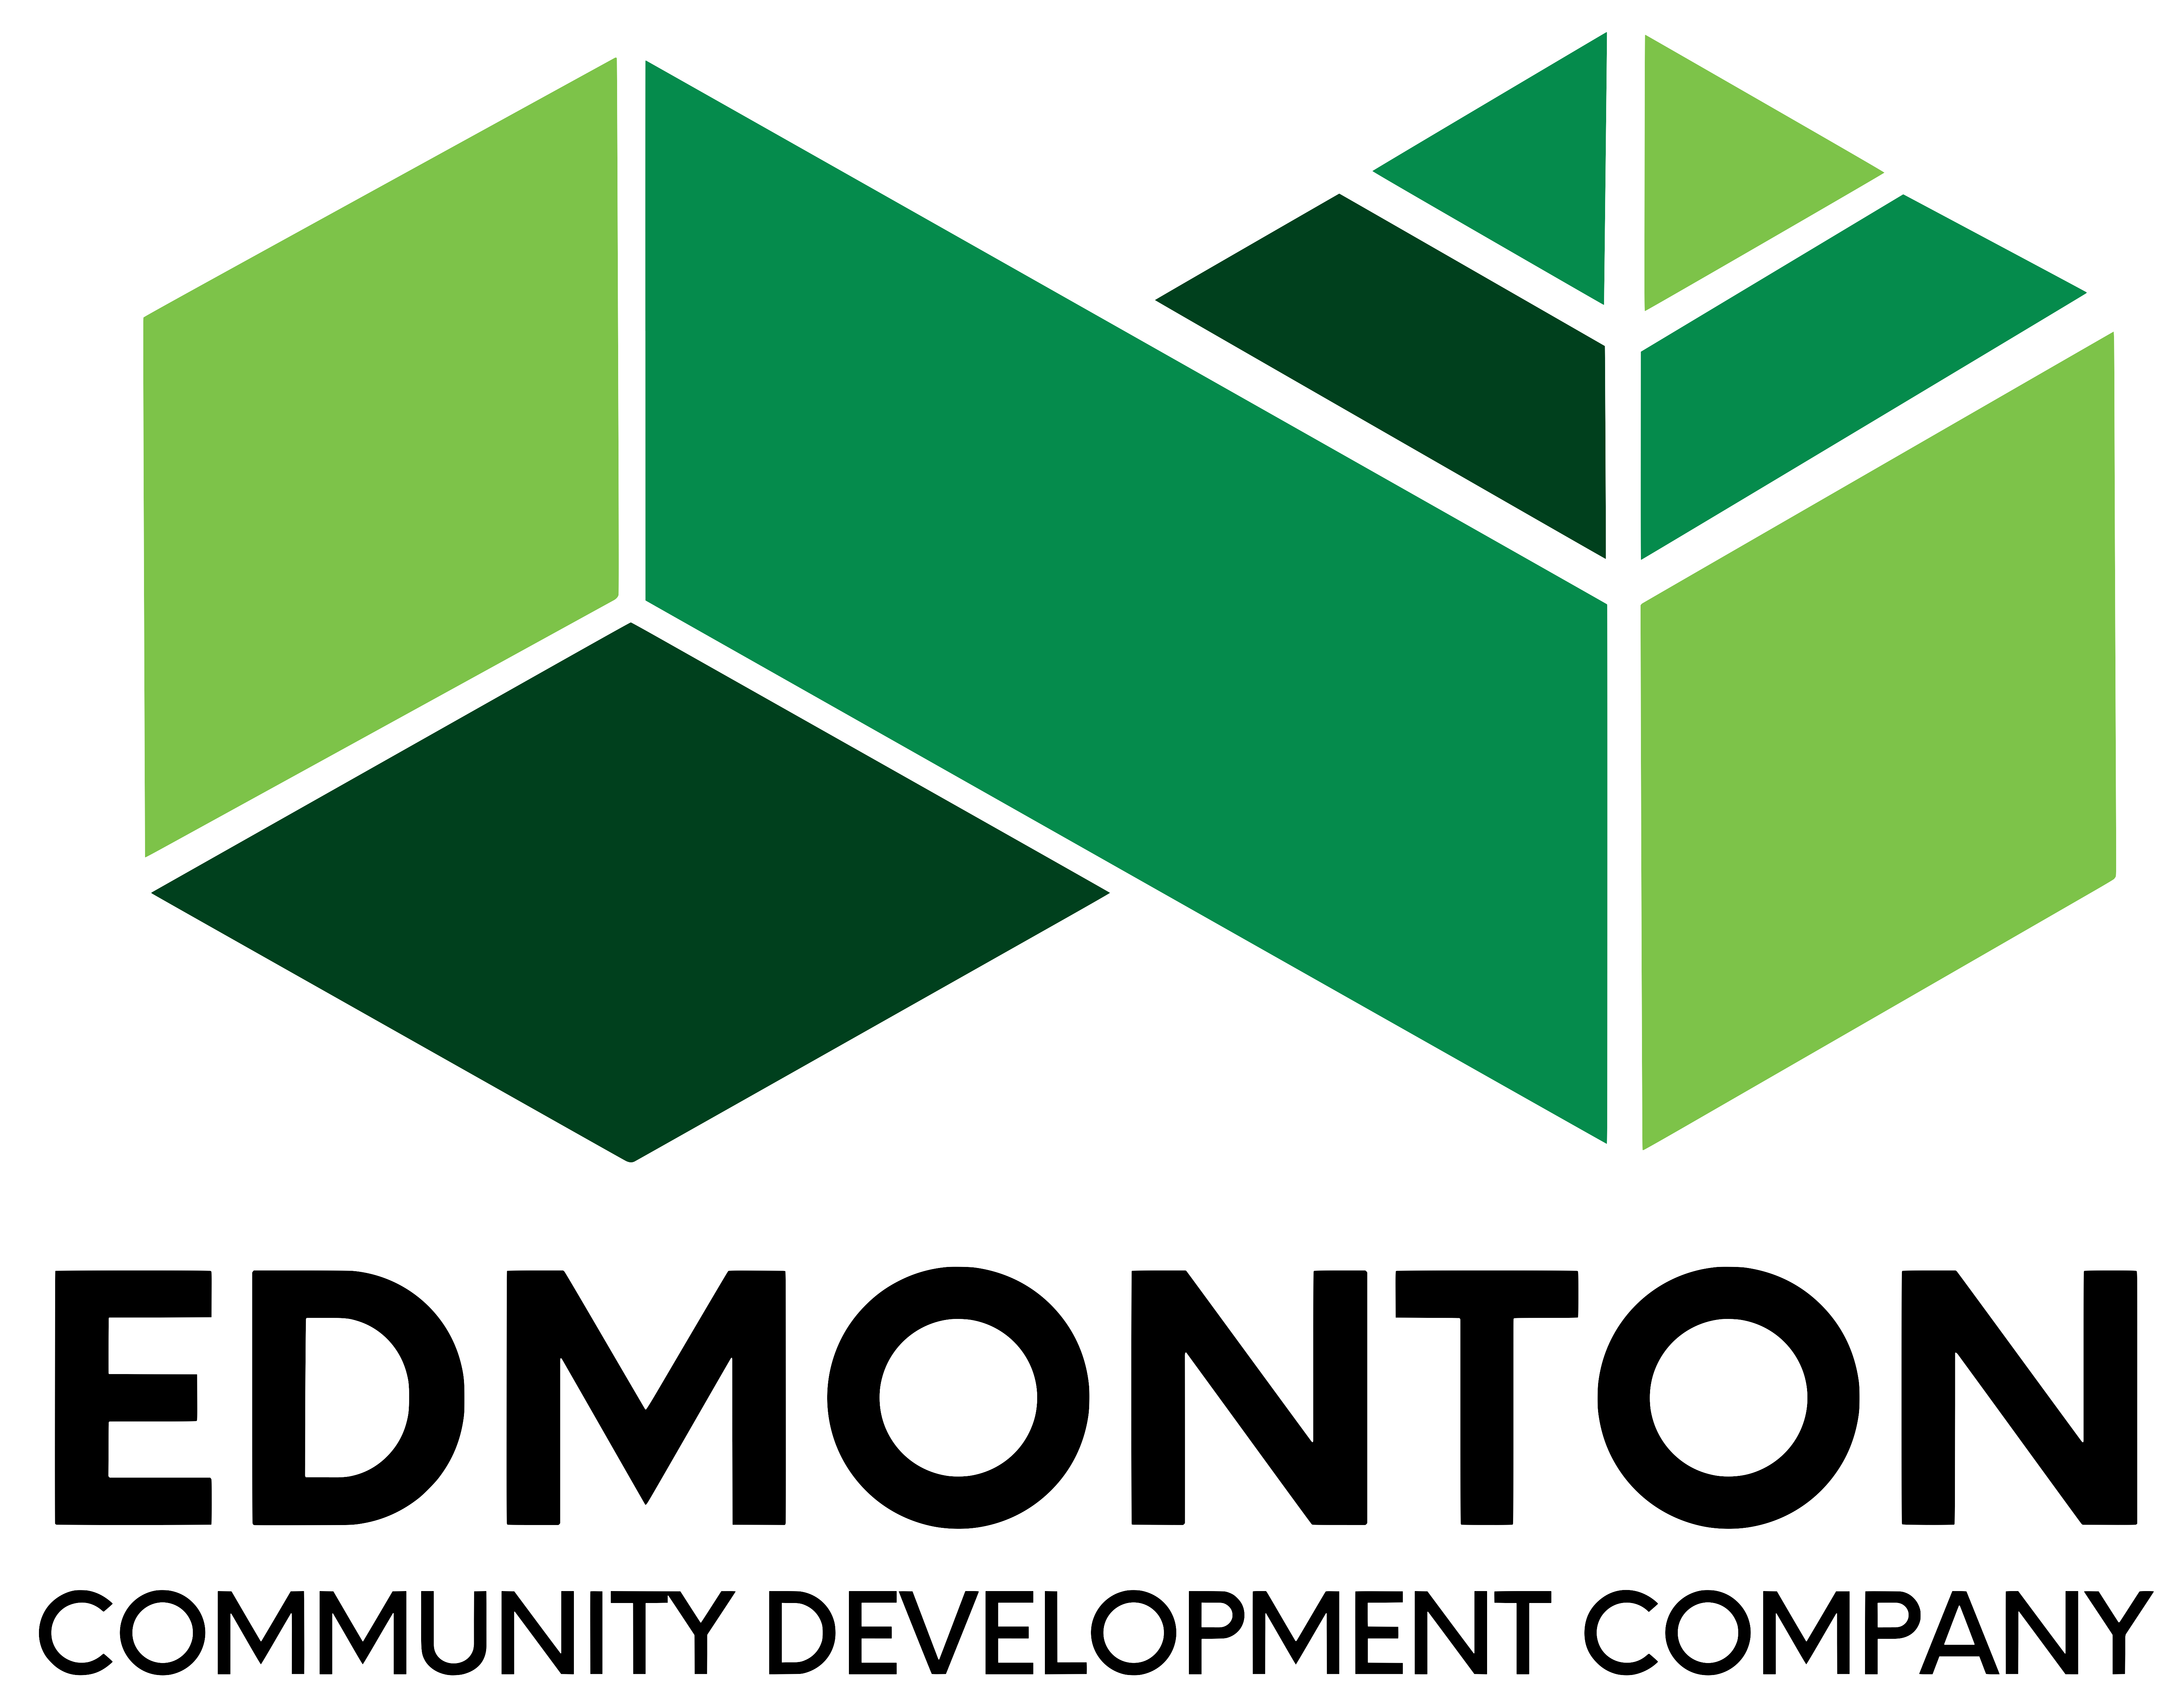 Logo for Edmonton Community Development Company on a transparent background